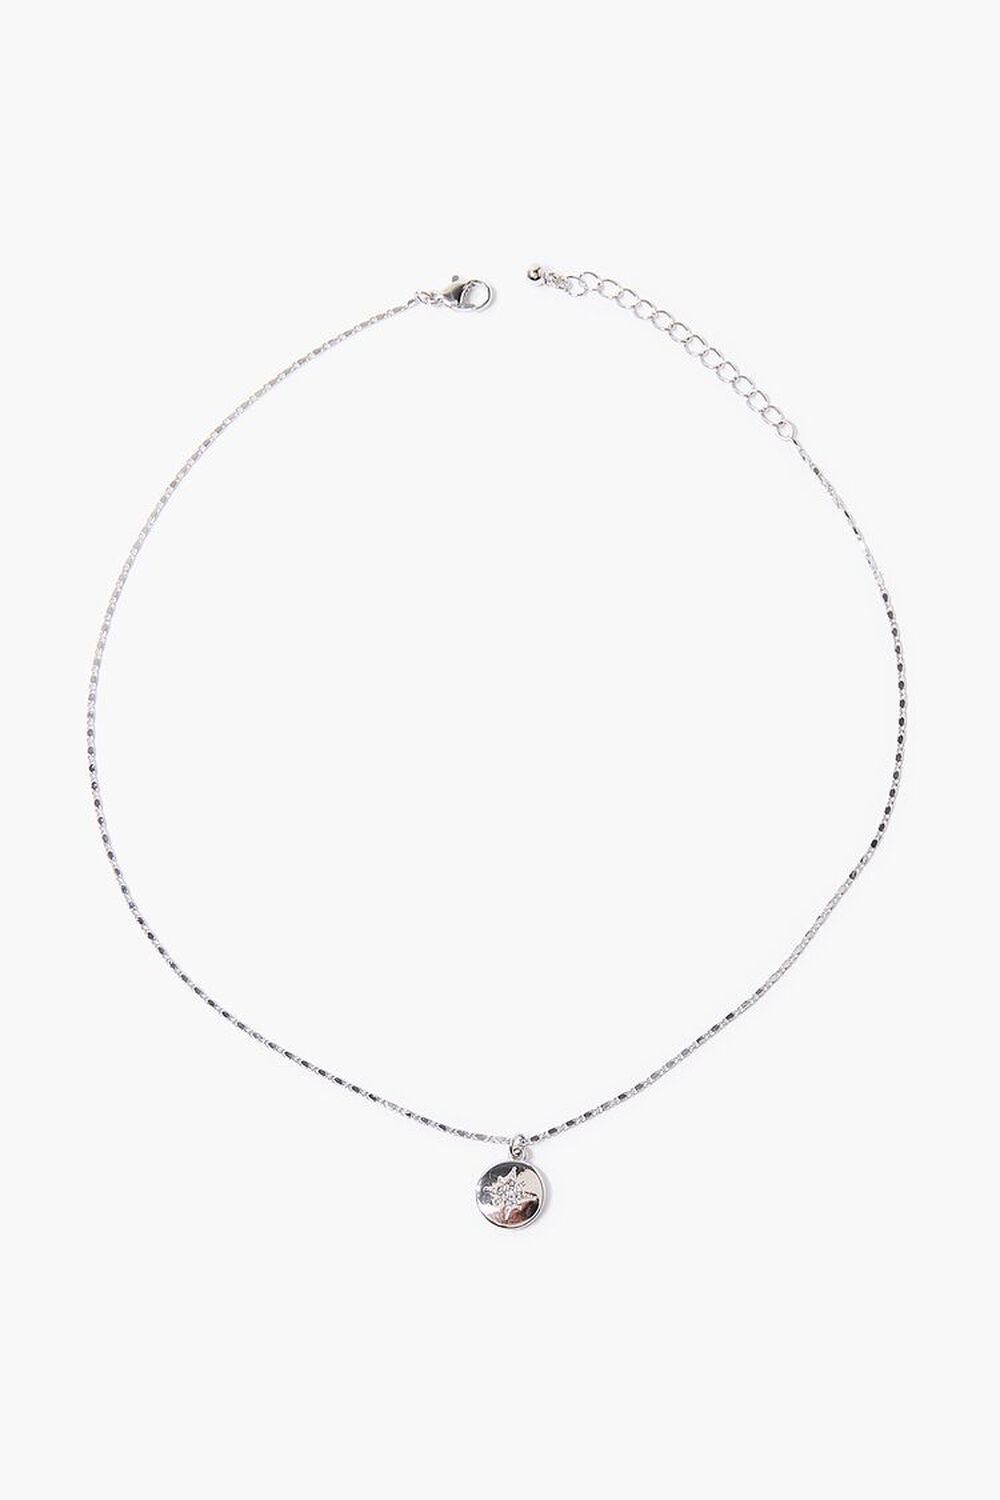 SILVER Rhinestone Star Round Charm Necklace, image 2